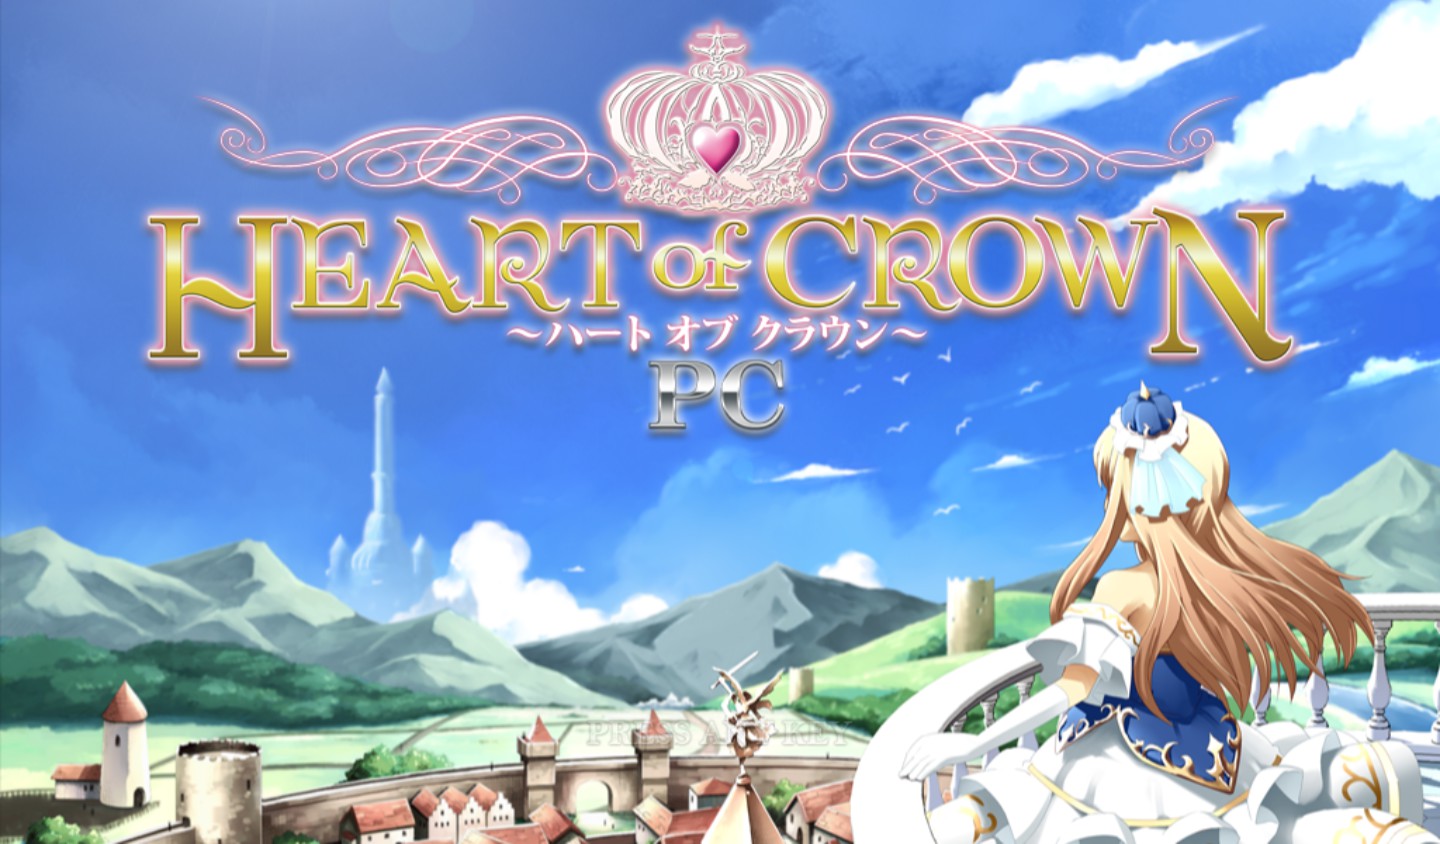 Heart of Crown PC screenshot